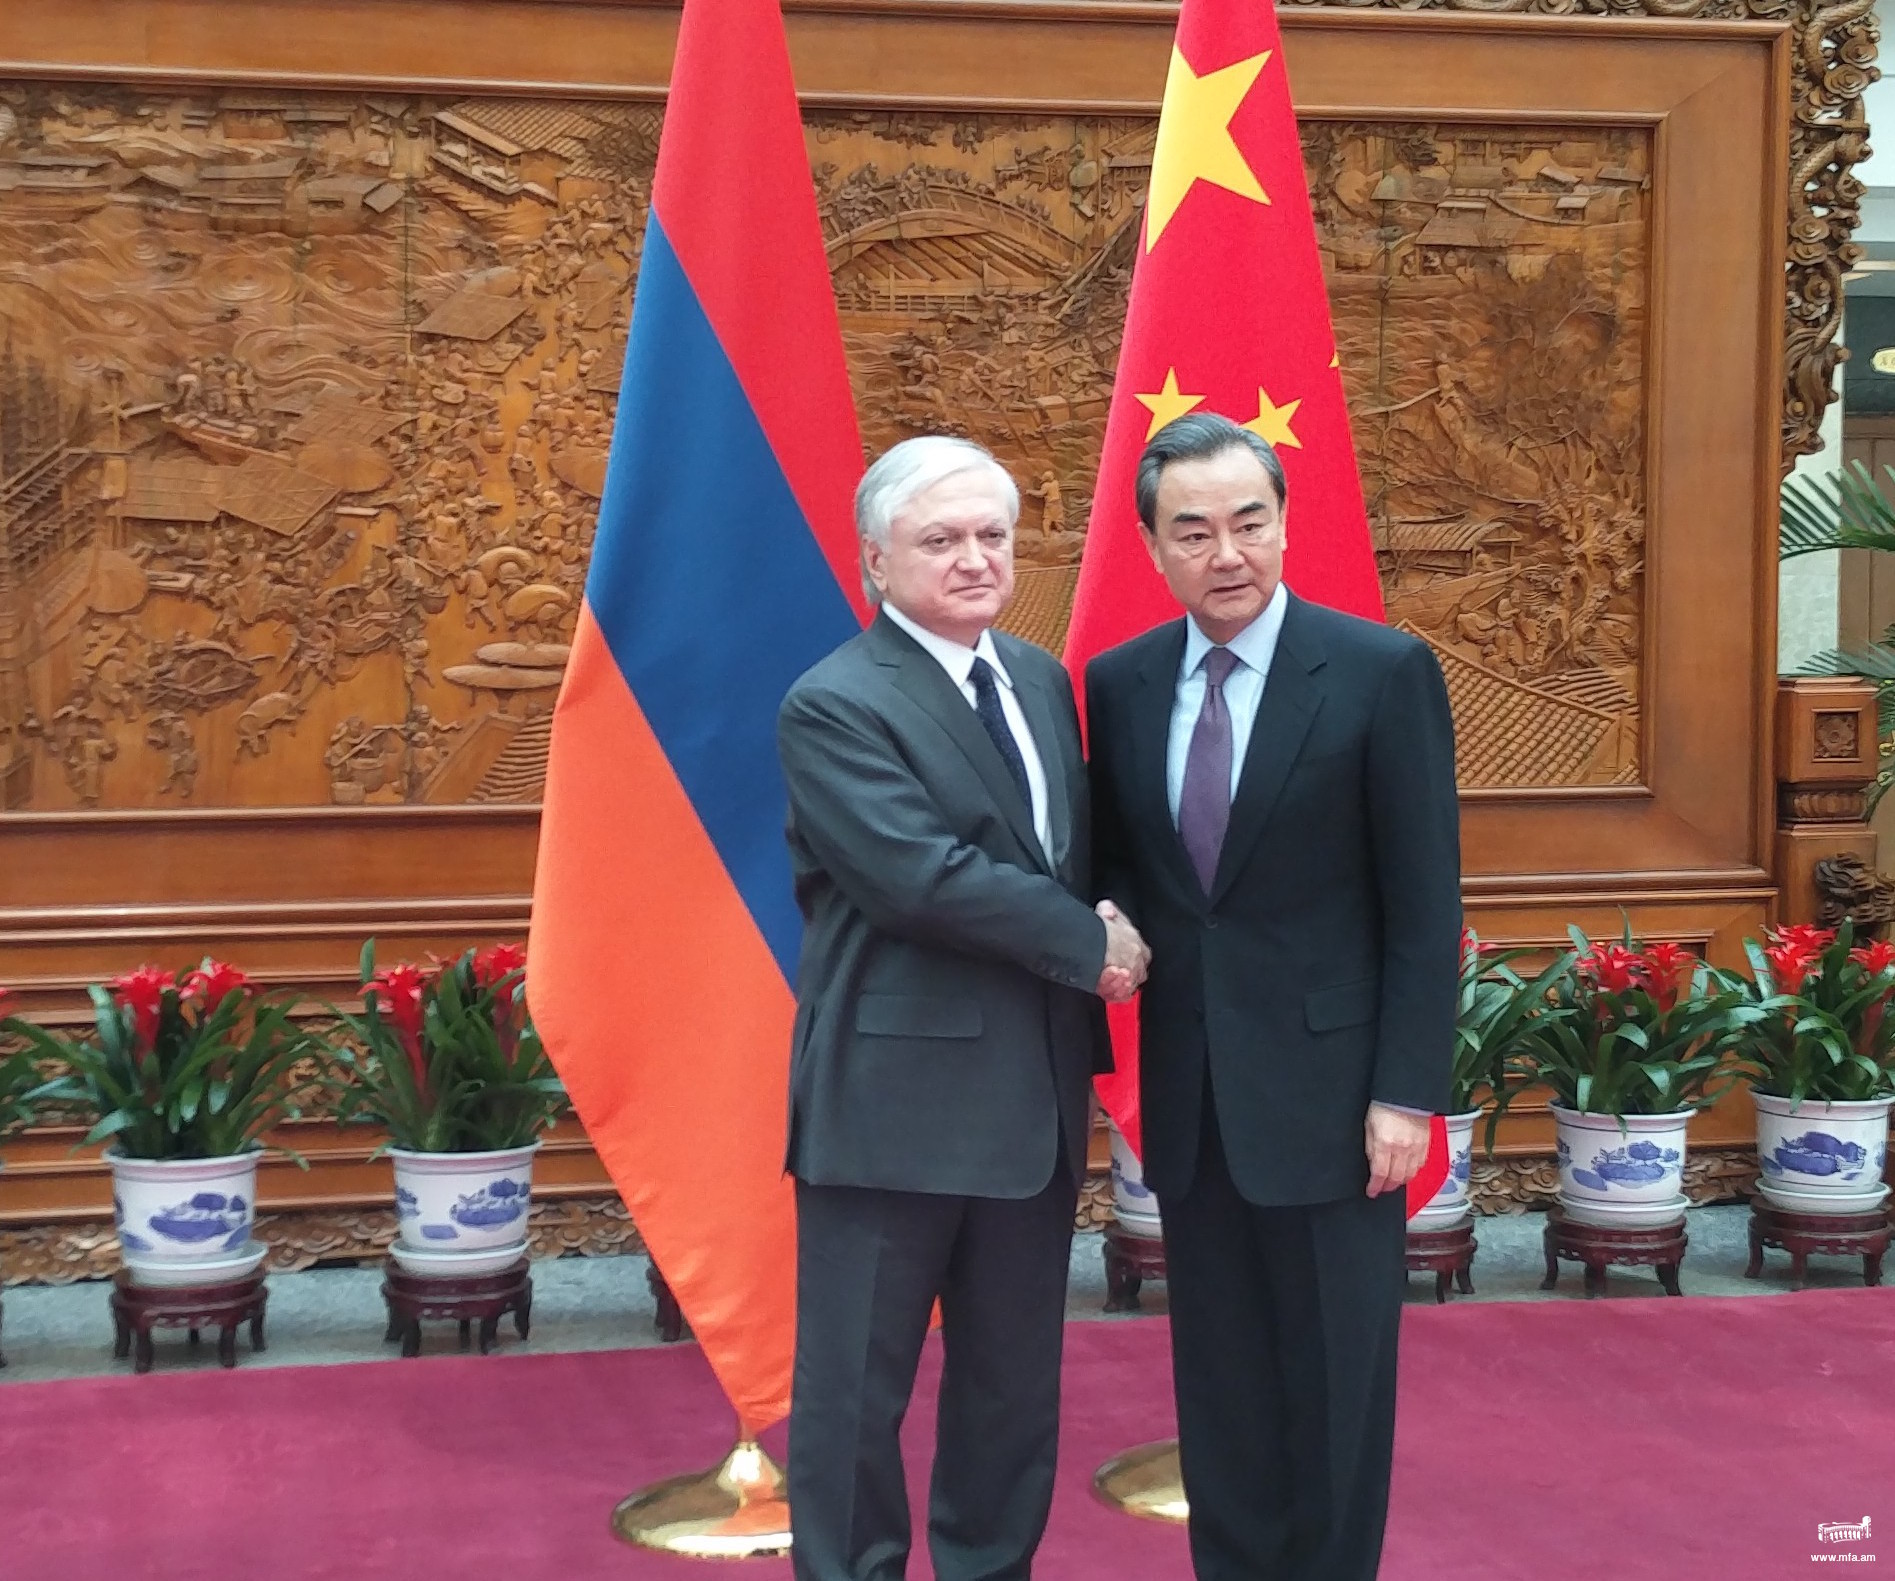 25th anniversary of establishment of diplomatic relations between Armenia and China